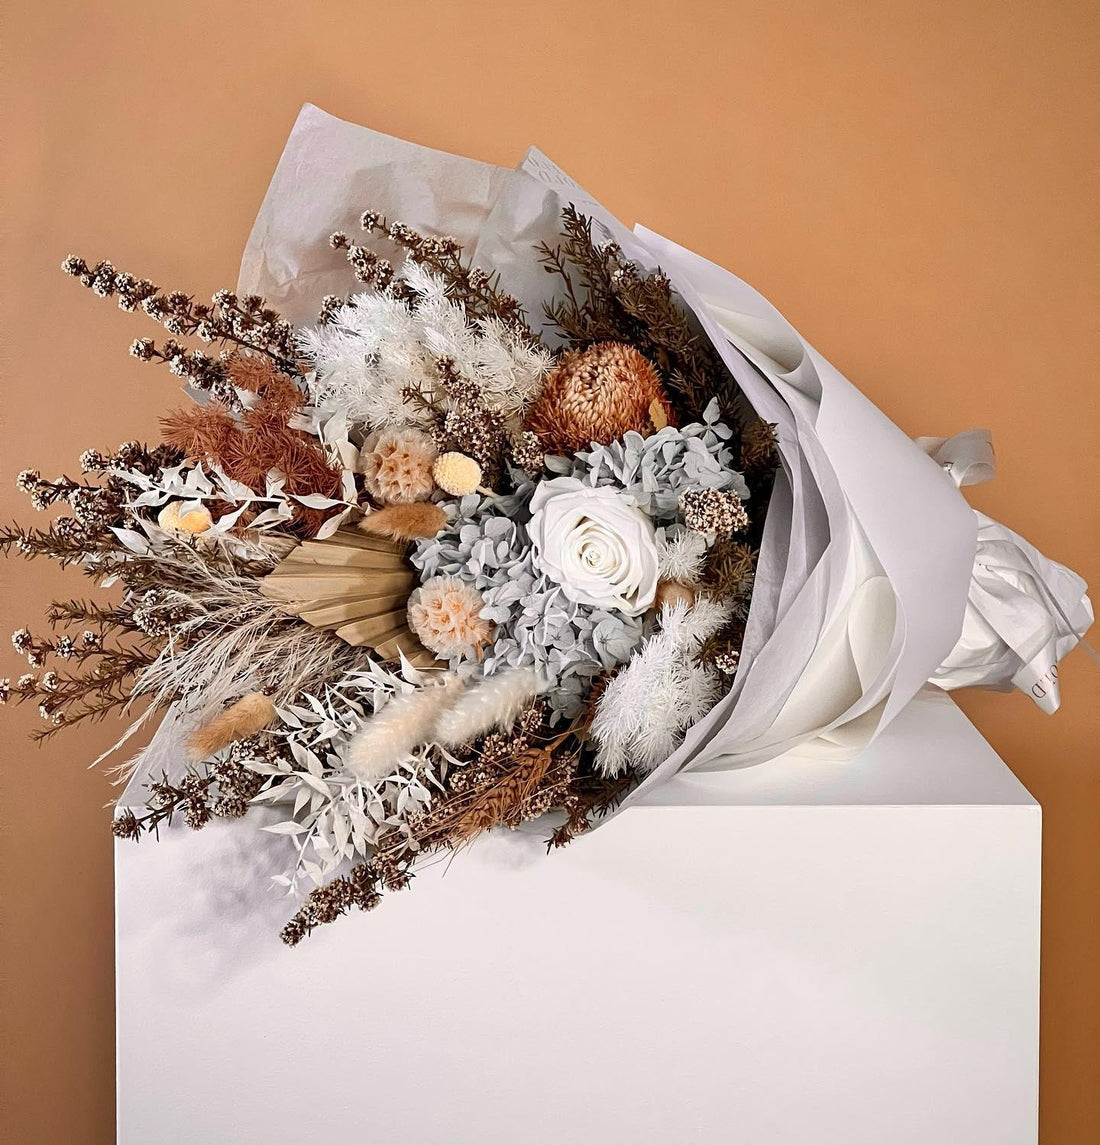 V A N I L L A  I C E <br />
<br />
A stunning Dried Flowers arrangement with vanilla, latte and powd - Flowers Gold Coast